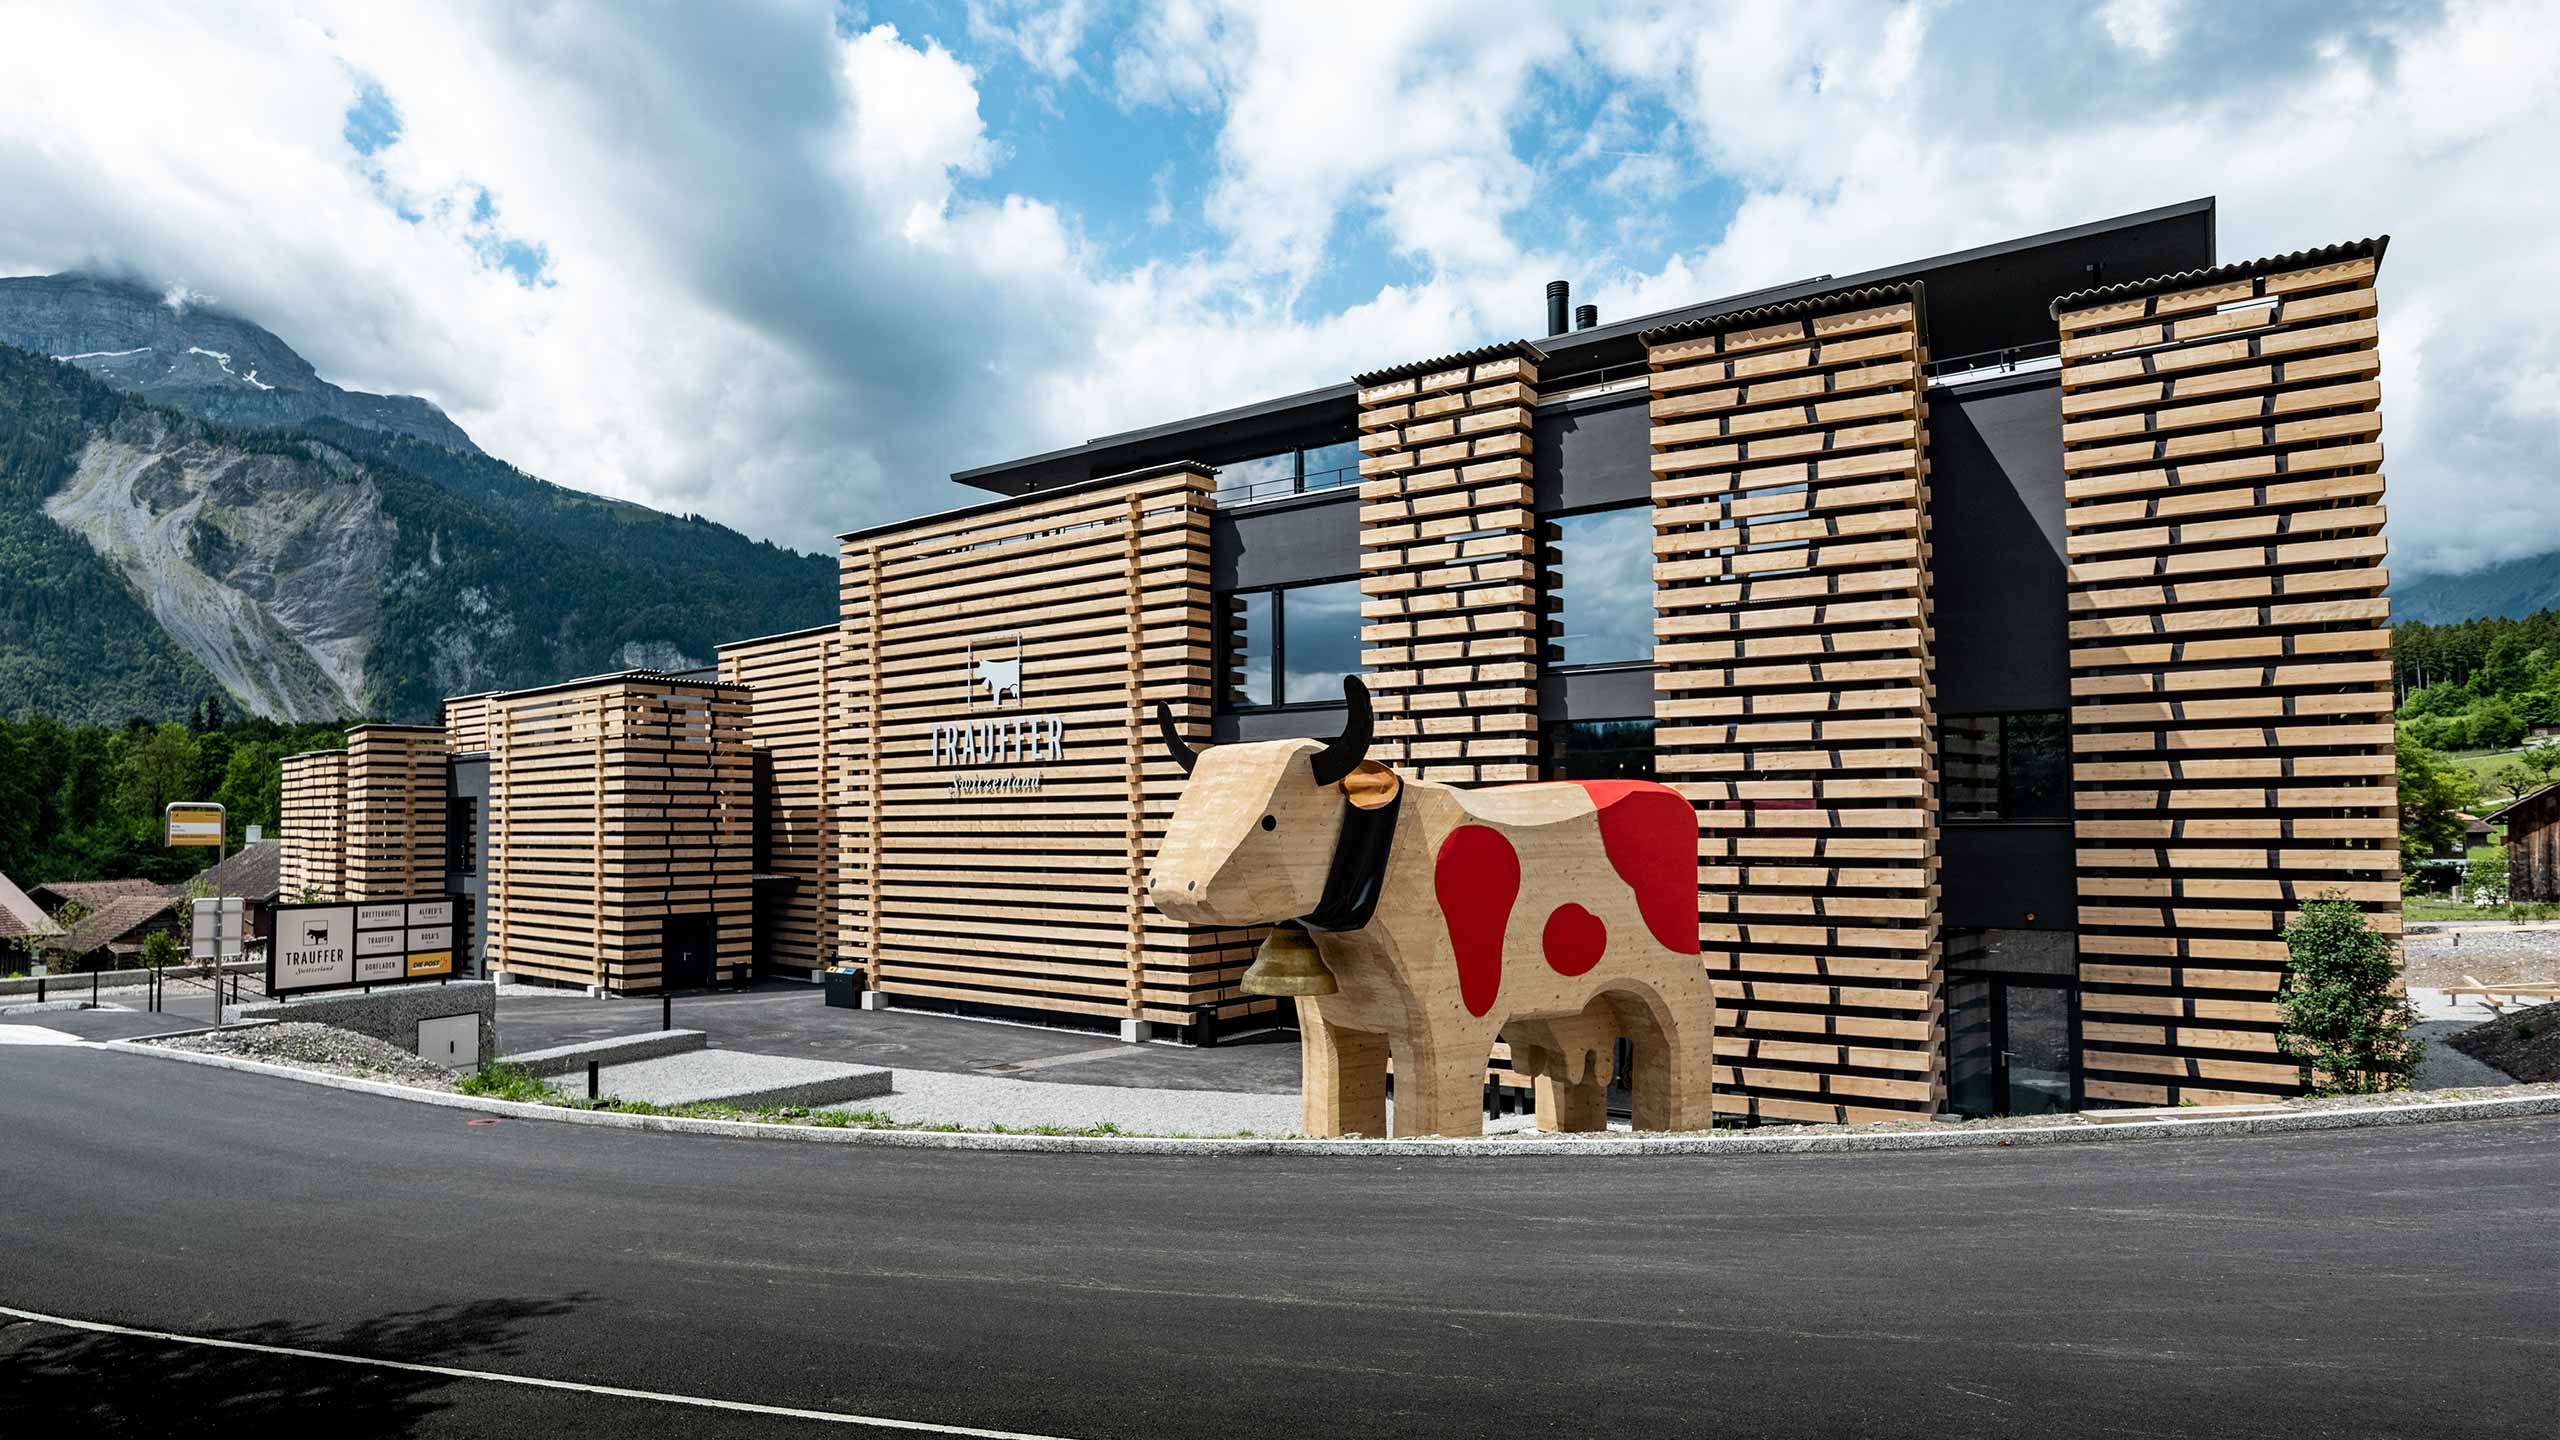 Trauffer Holzspielwaren – The famous Swiss wooden cows